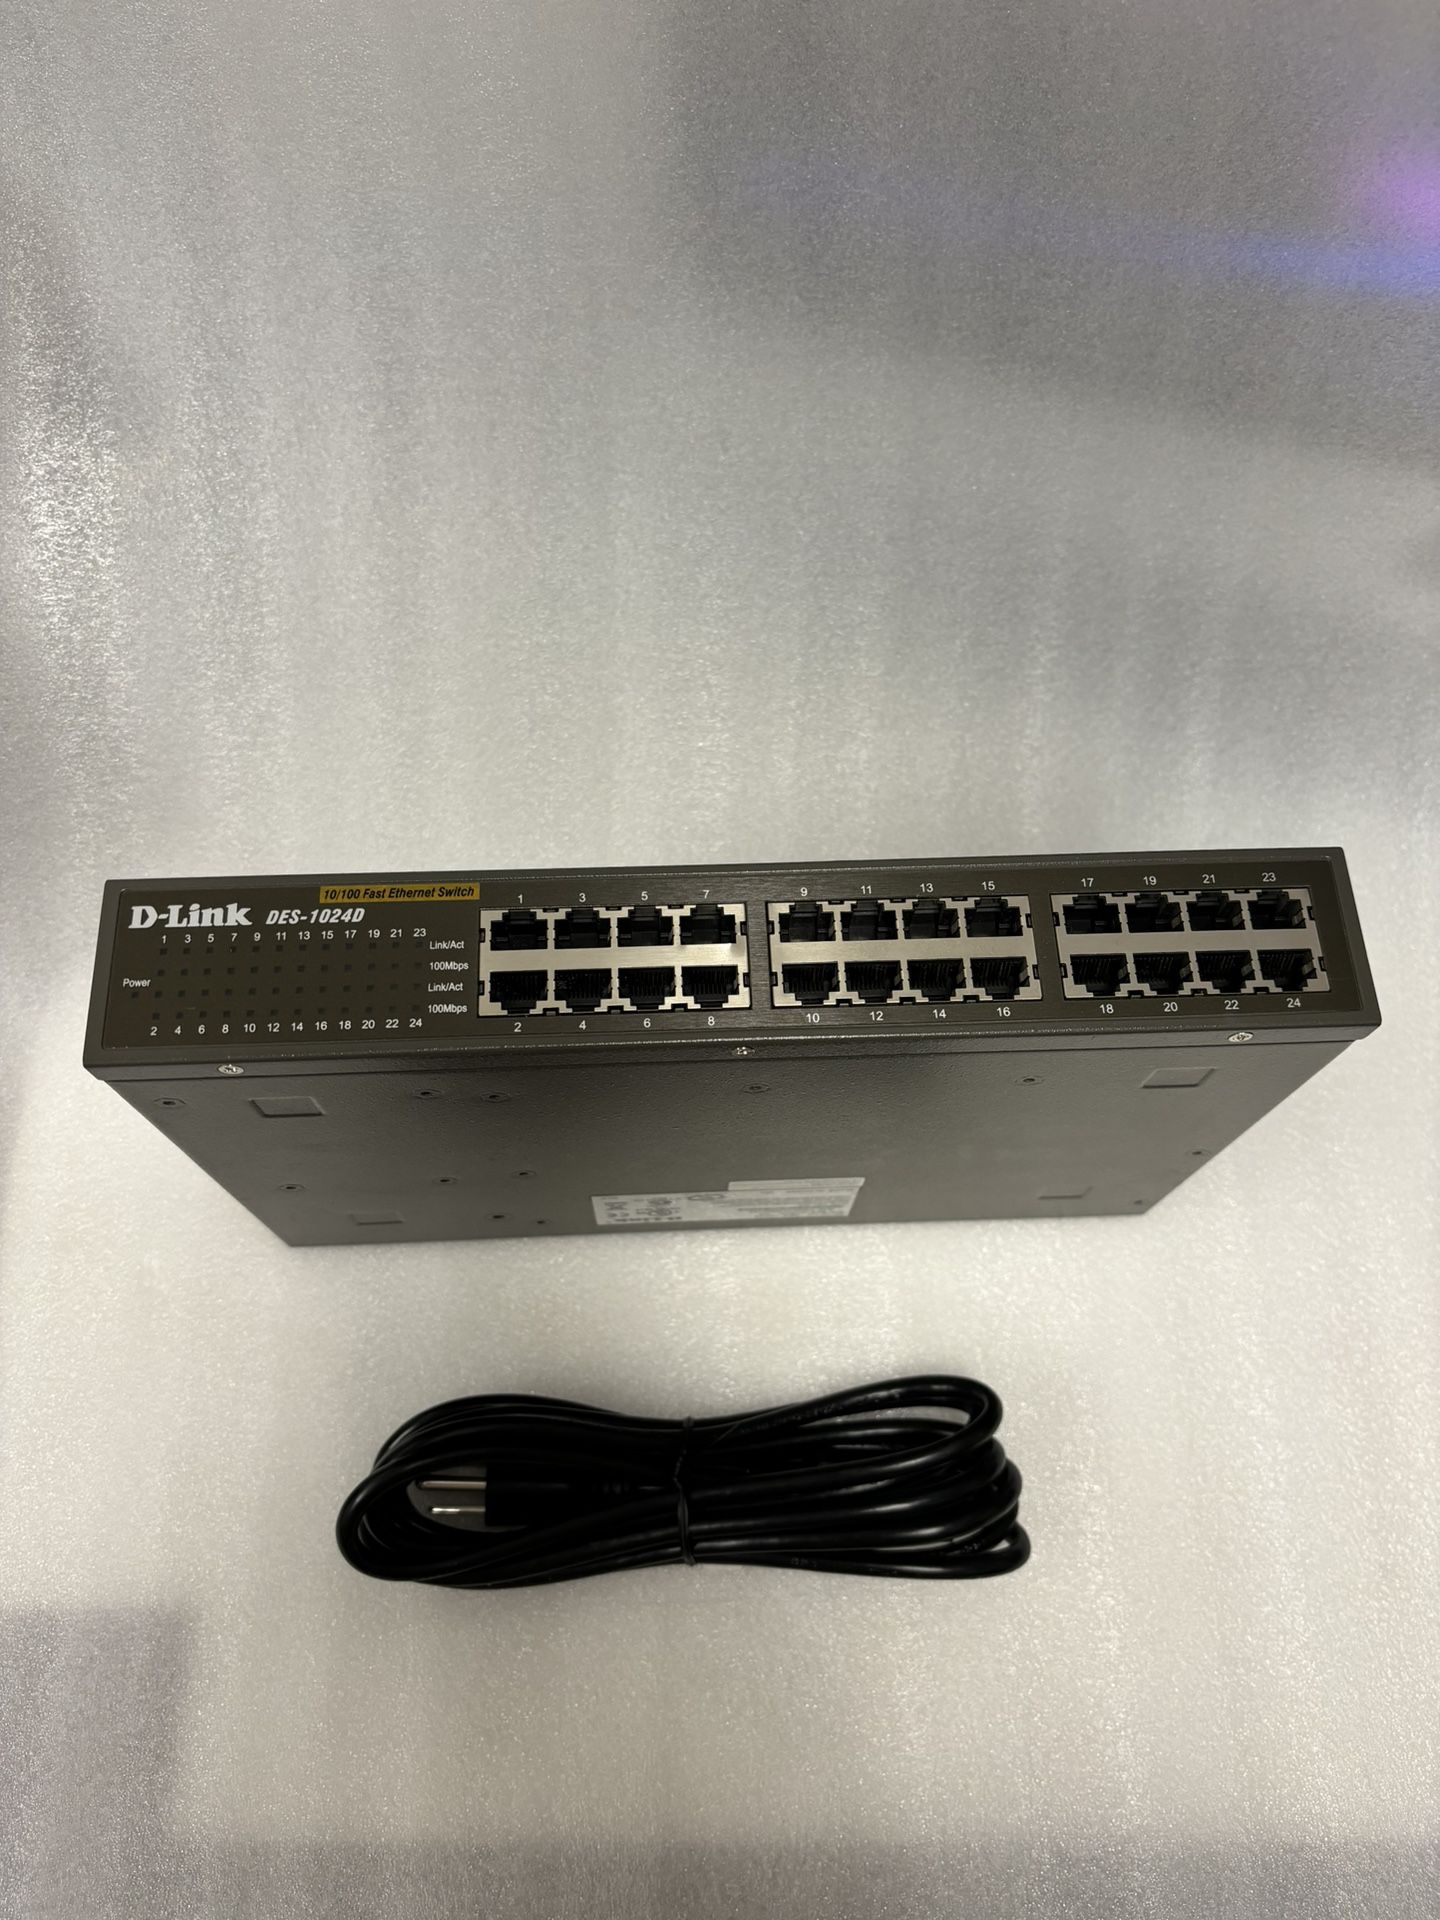 D-Link Dlink 24 Ports 10/100 Fast Ethernet Switch Router